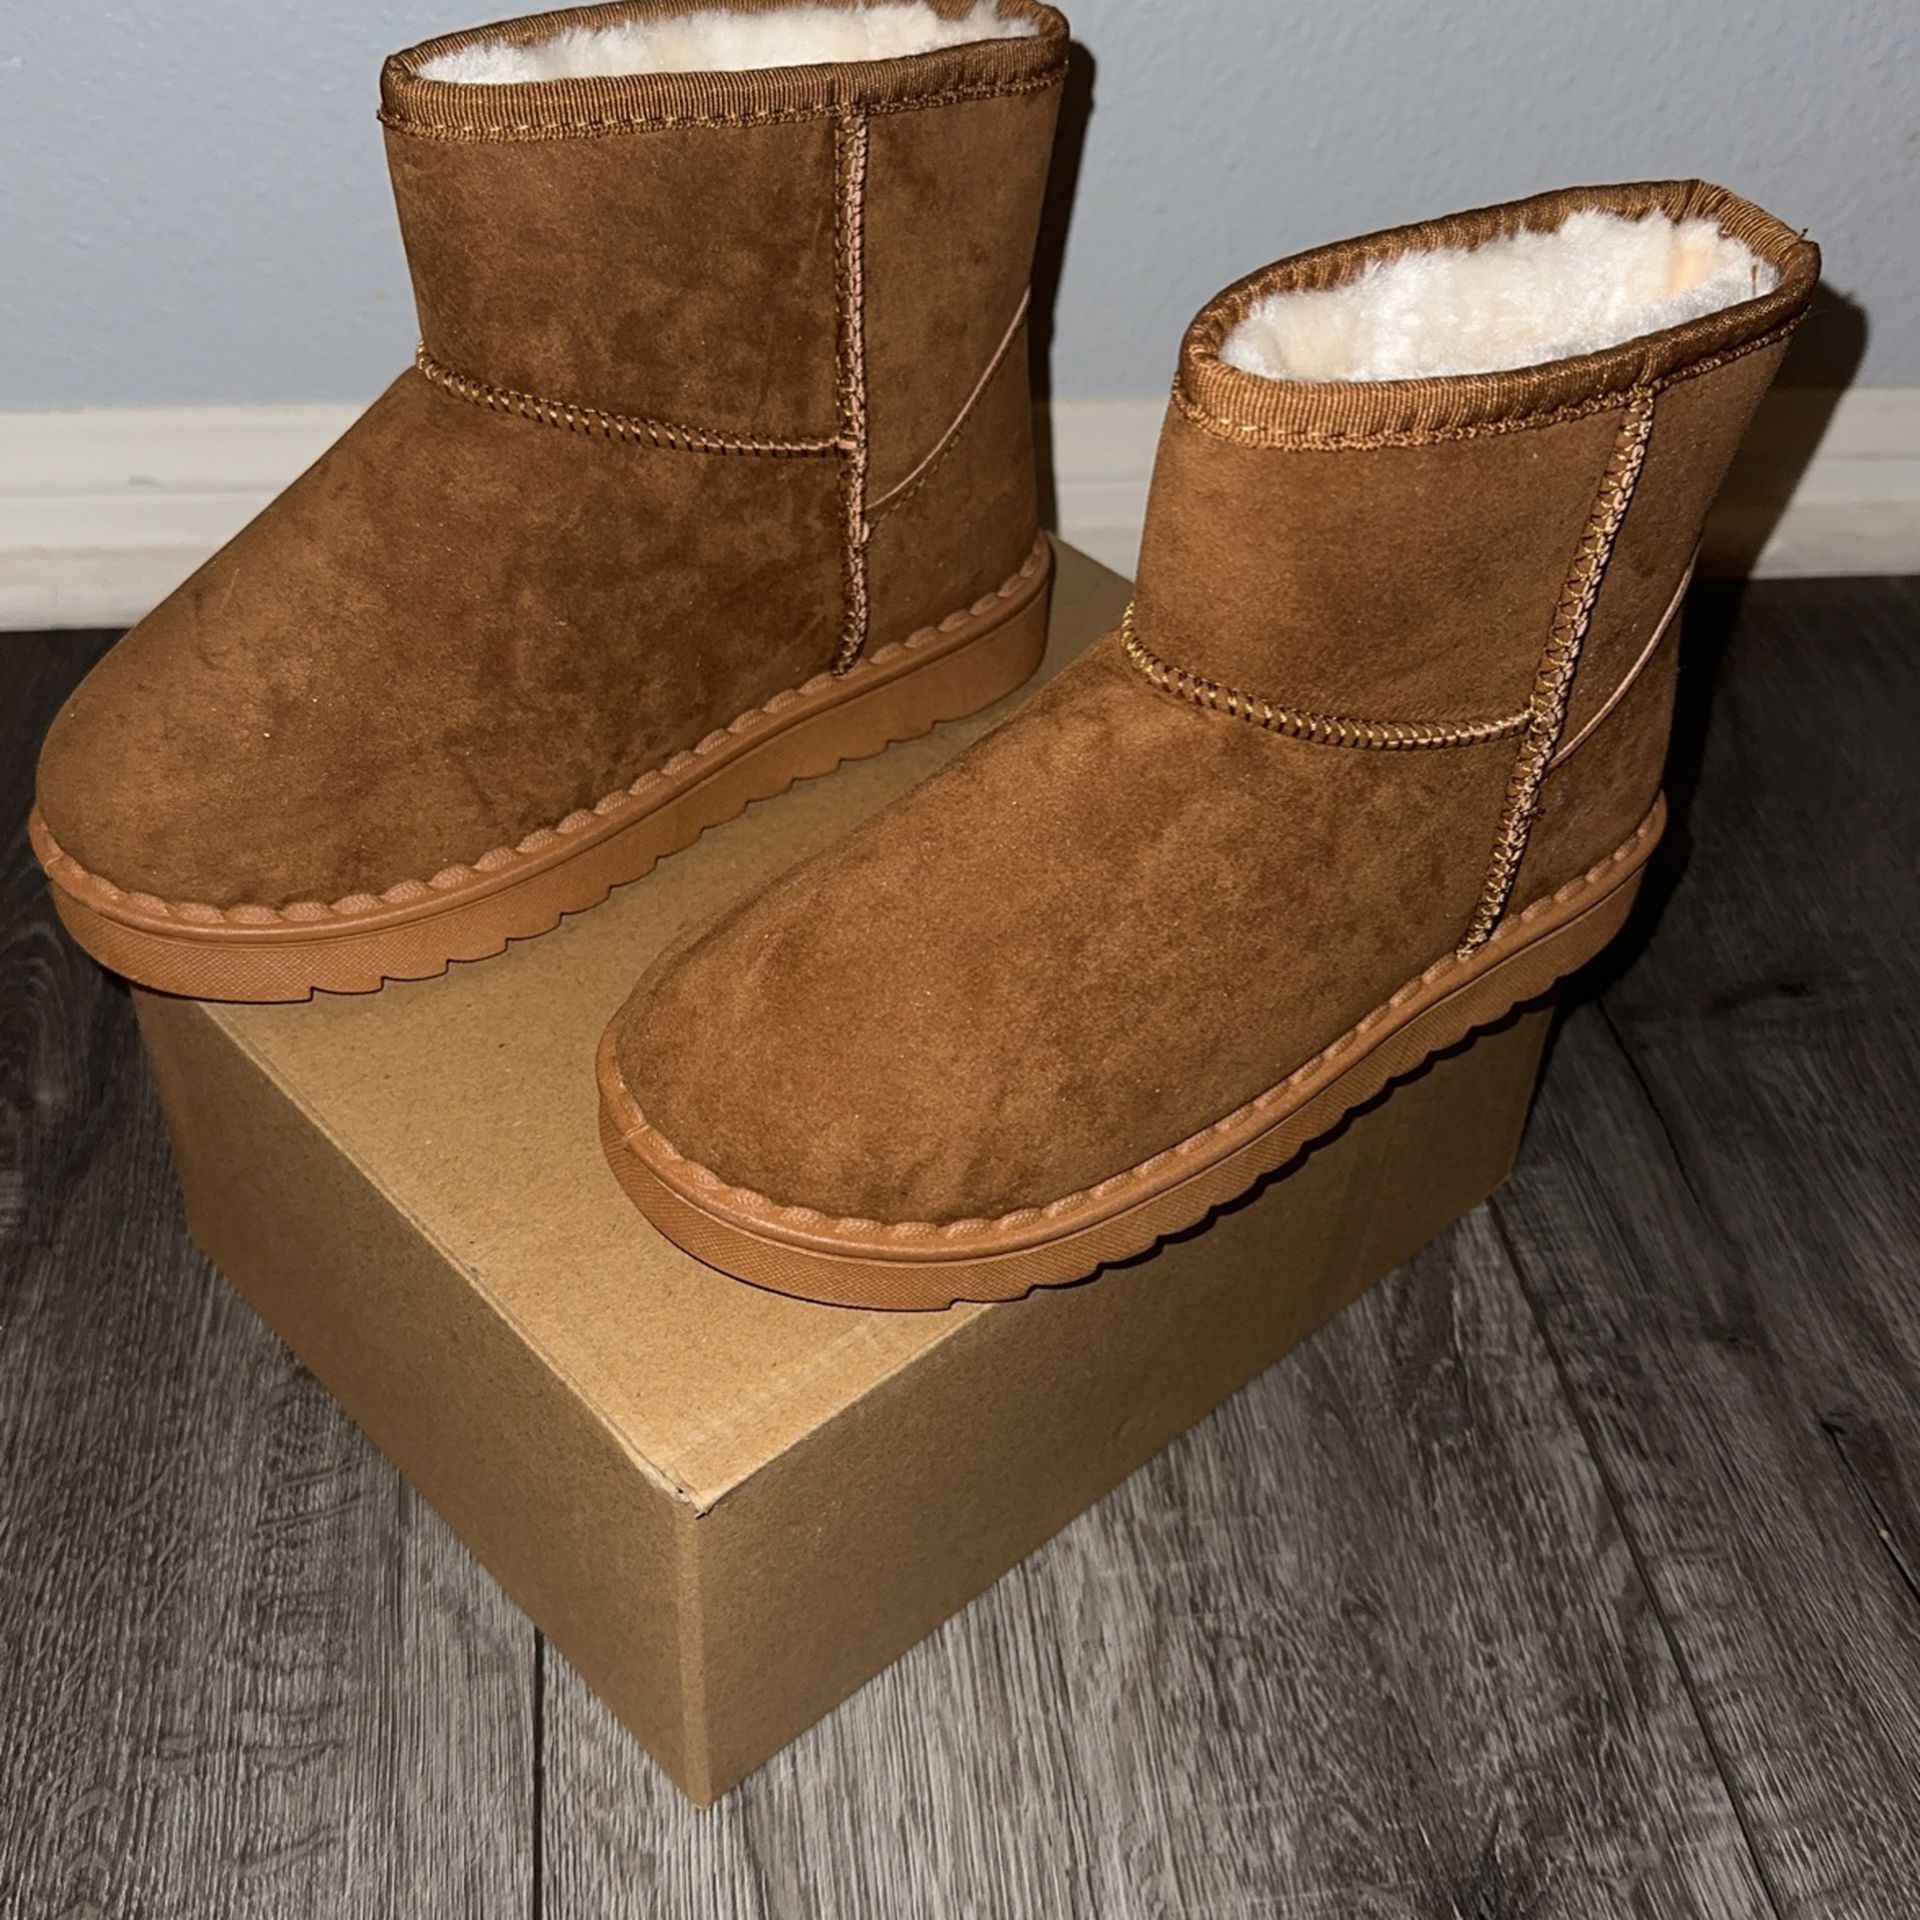 Kids Fur Brown Boots - BRAND NEW